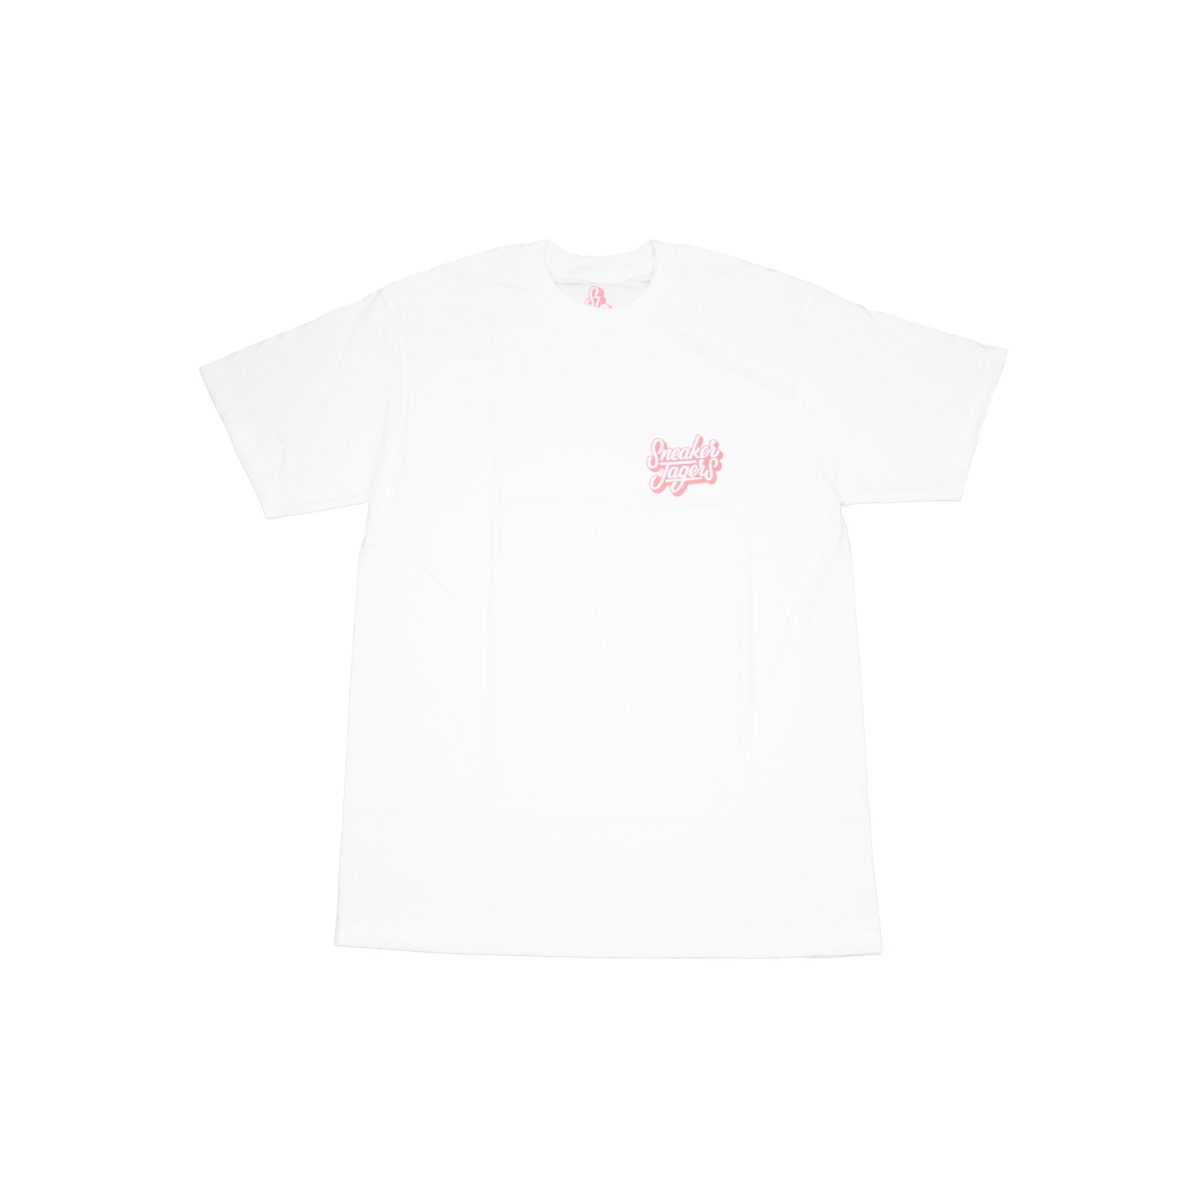 Sneakerjagers t-shirt white en dust pink